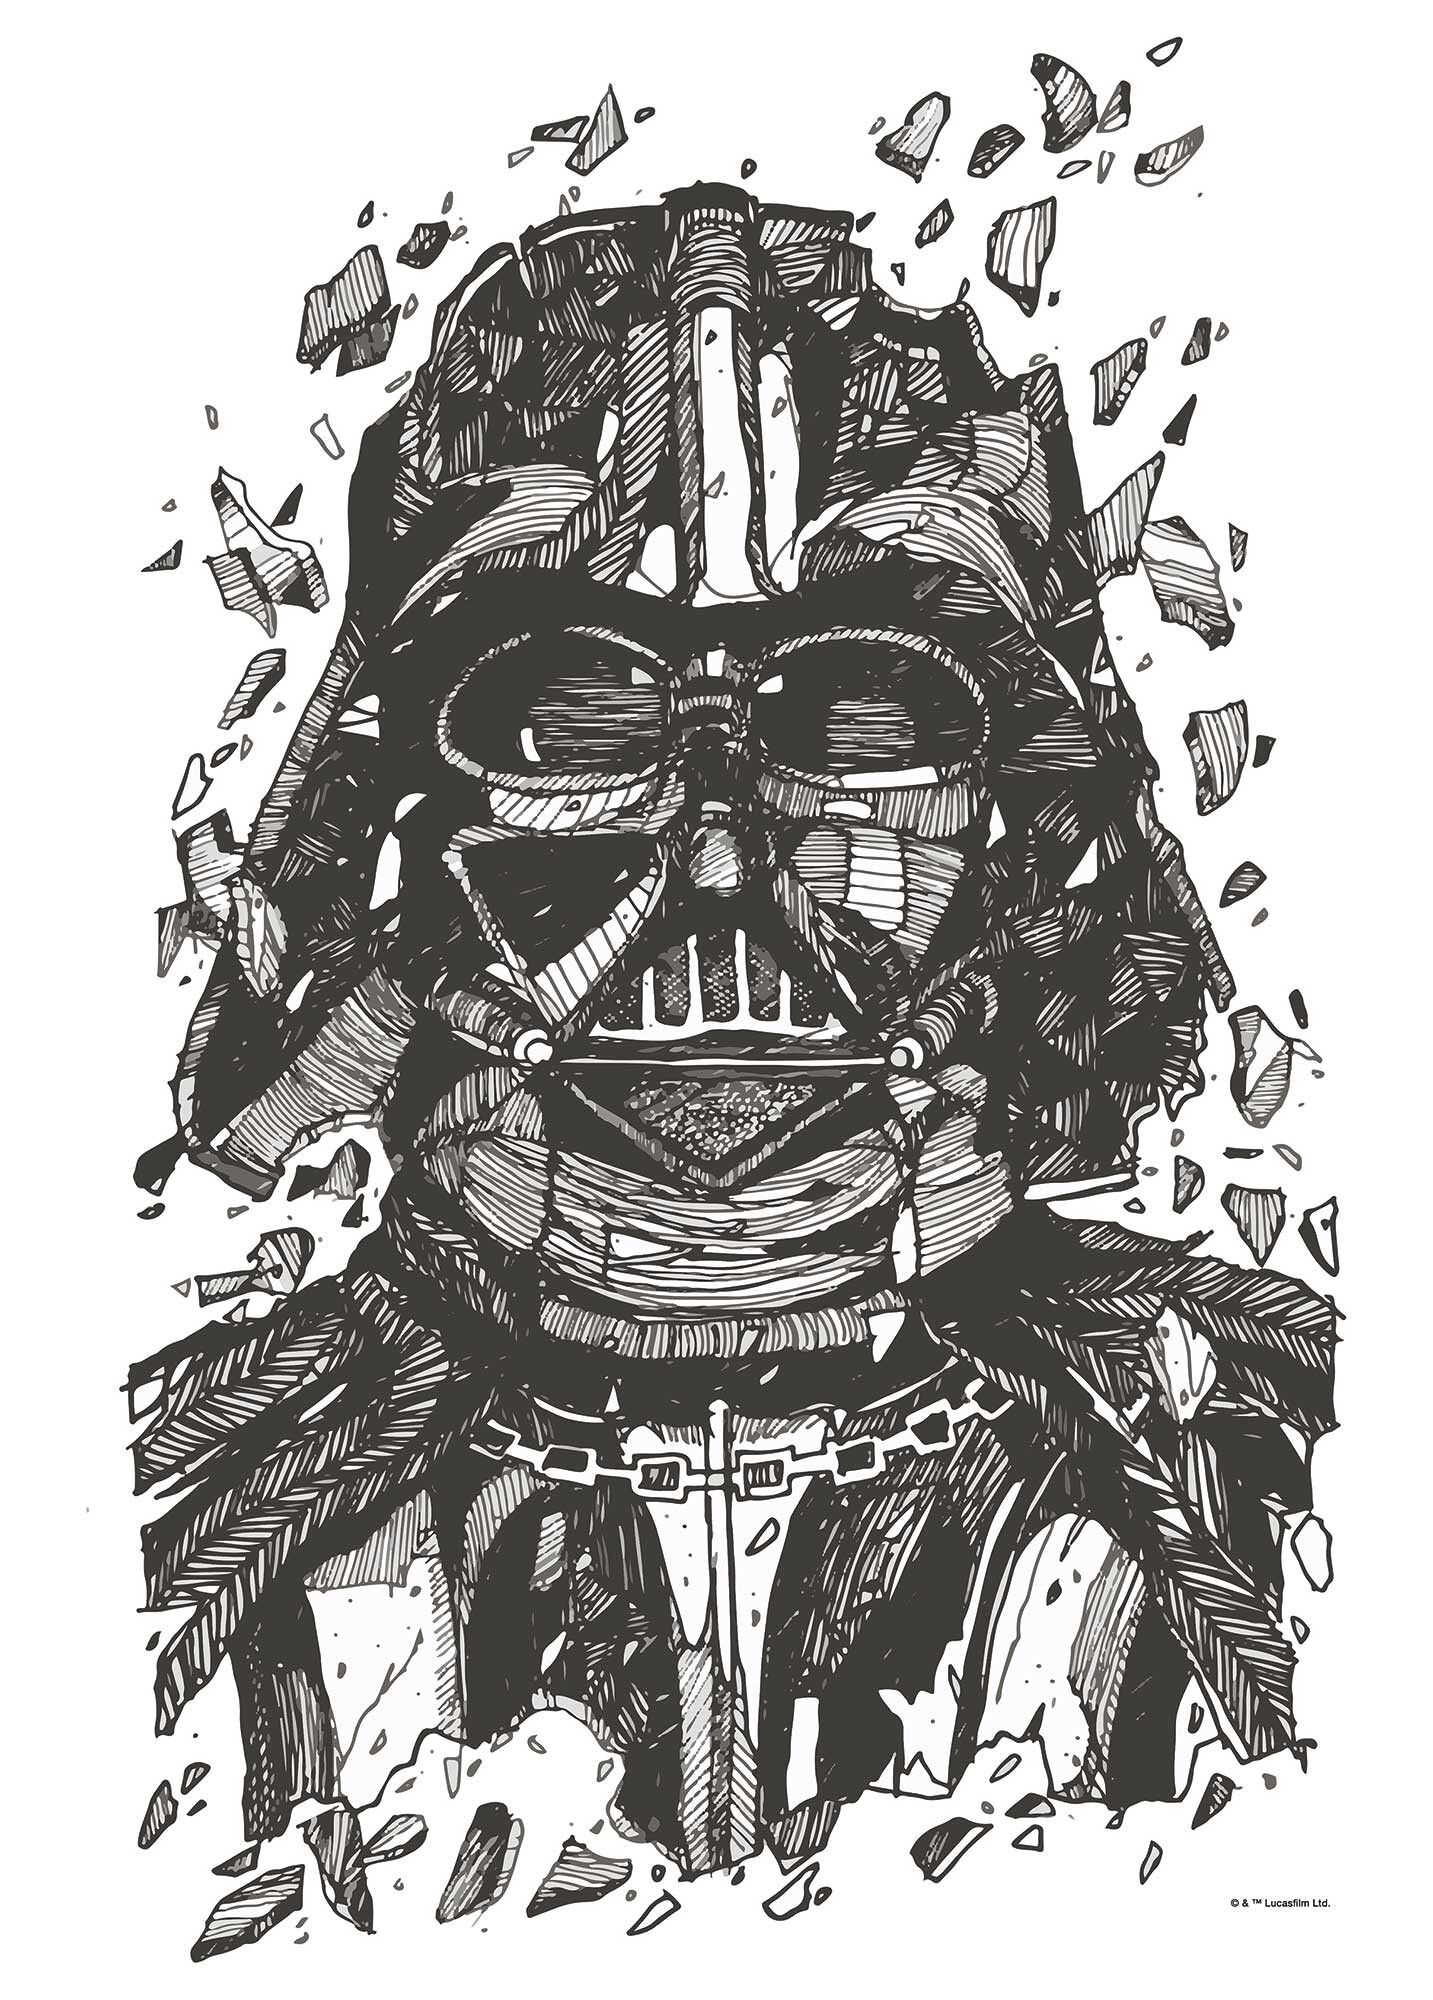 Buy wholesale Mural - Star Wars Darth Vader Drawing - Size: 50 x 70 cm